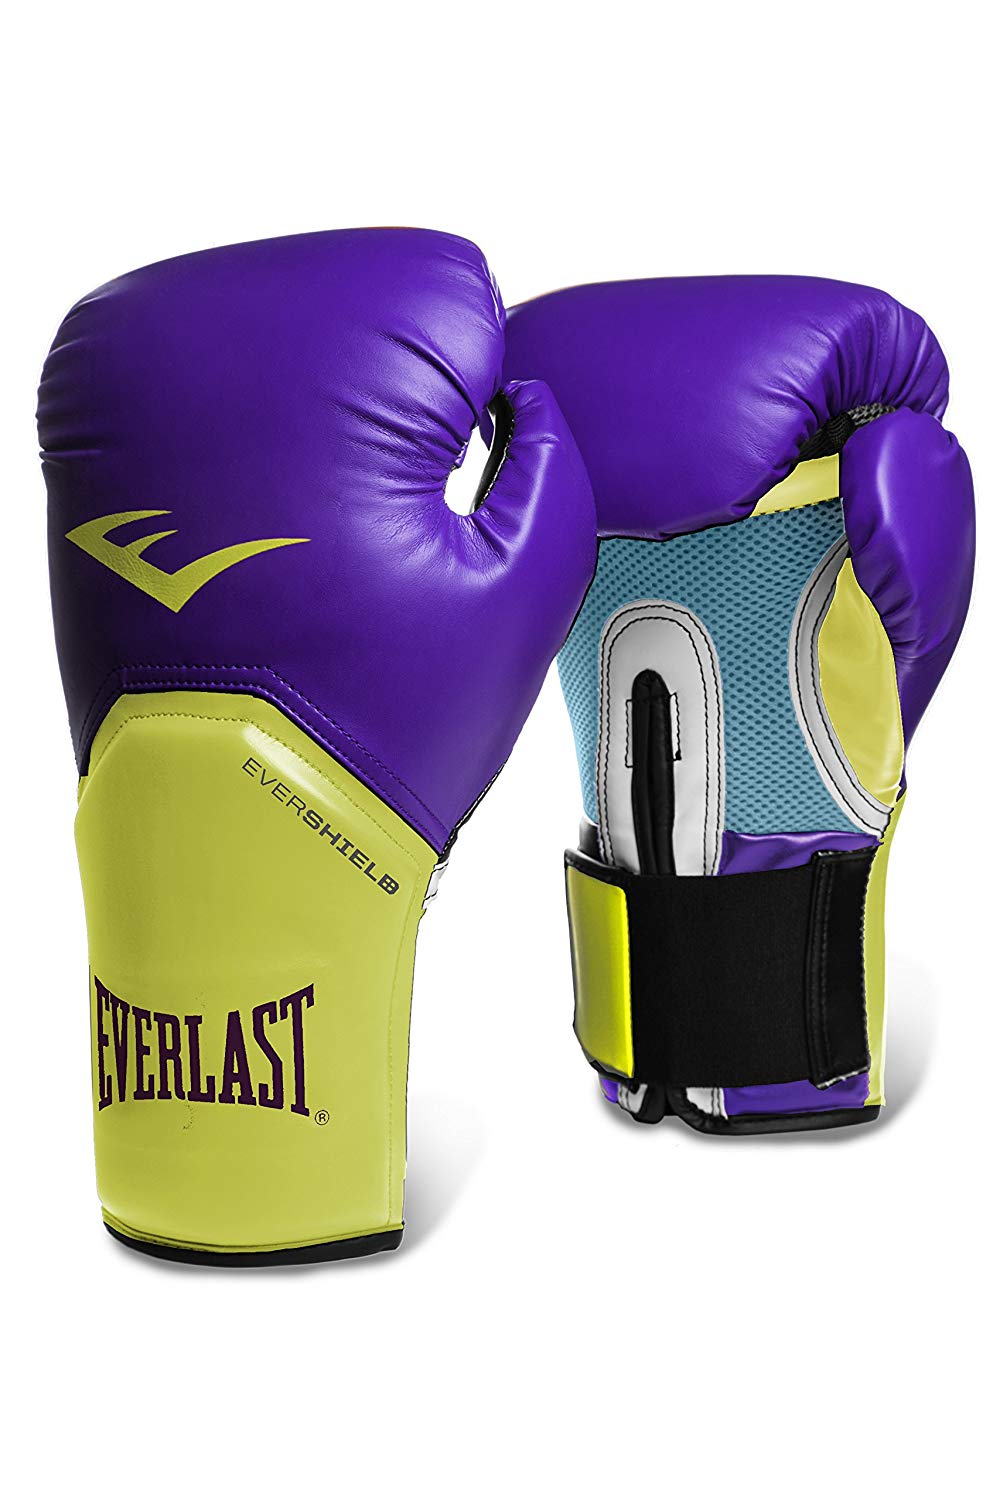 Everlast Pro Style Elite Training Glove, Purple-Yellow - Best Price online Prokicksports.com